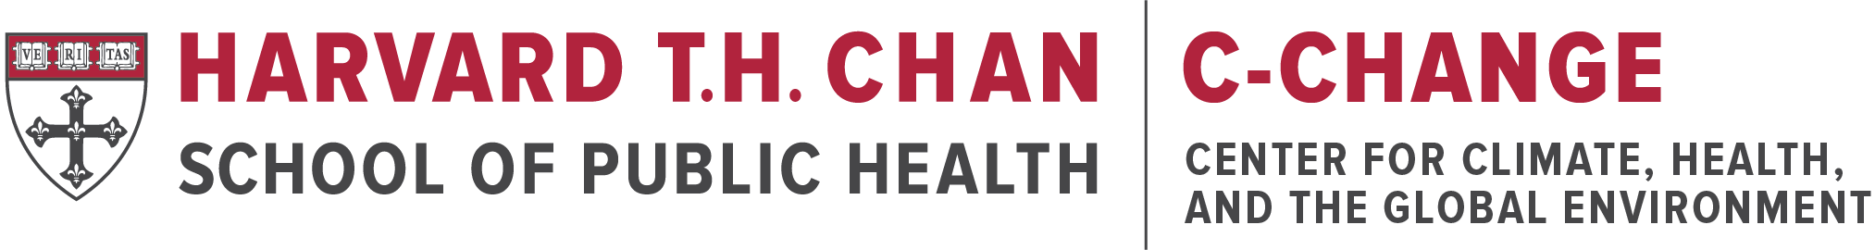 C-CHANGE | Harvard T.H. Chan School of Public Health